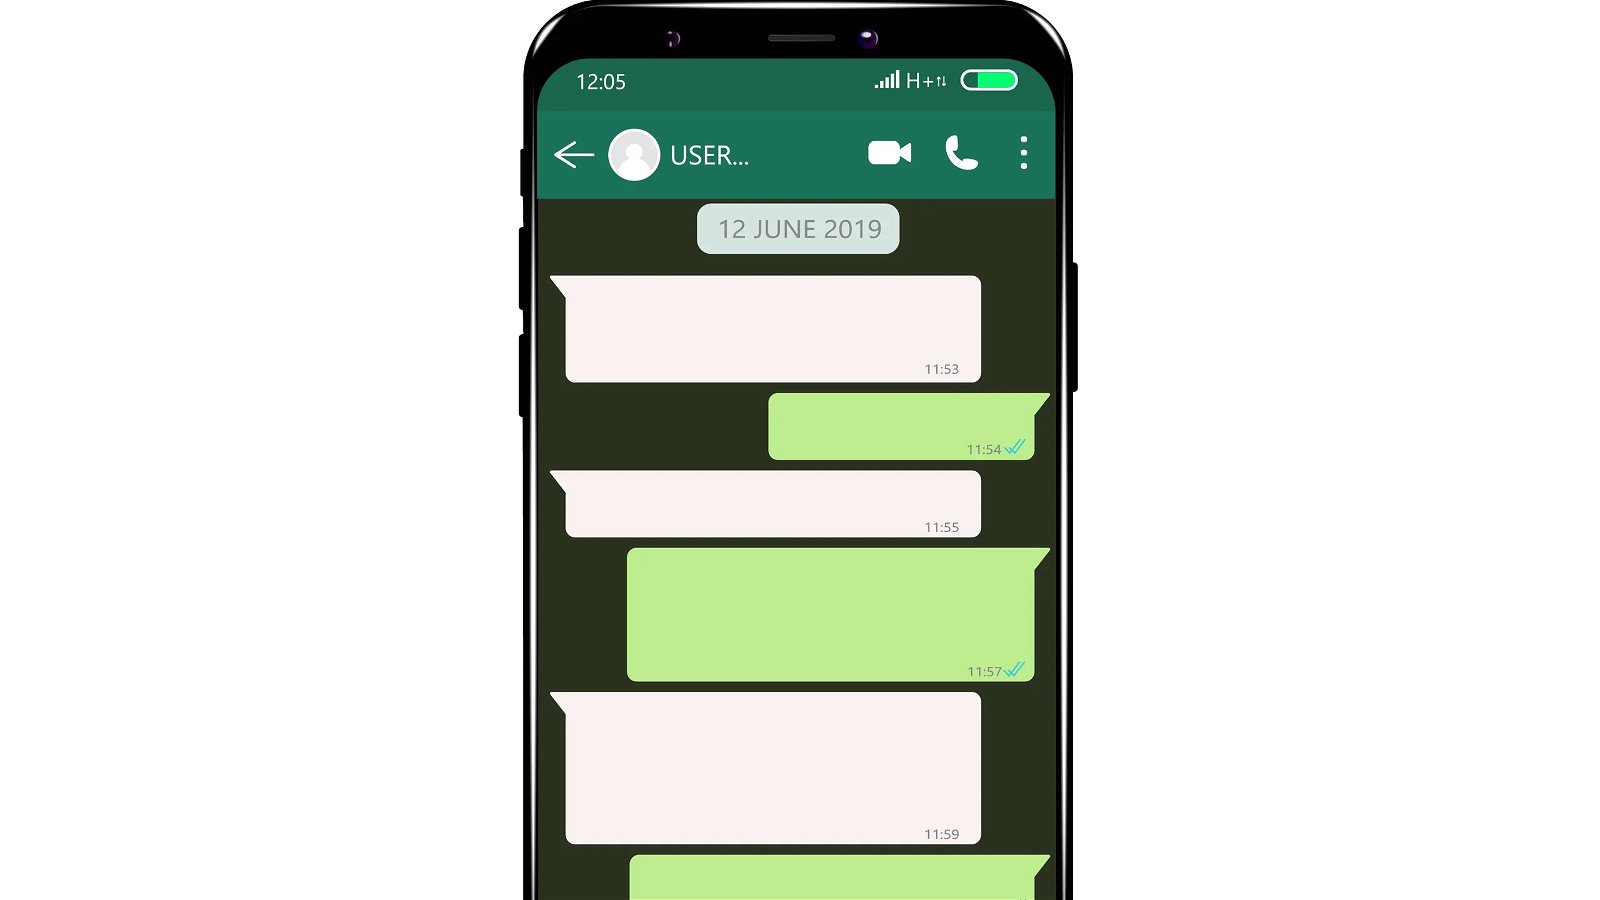 Móvil con un chat de WhatsApp abierto